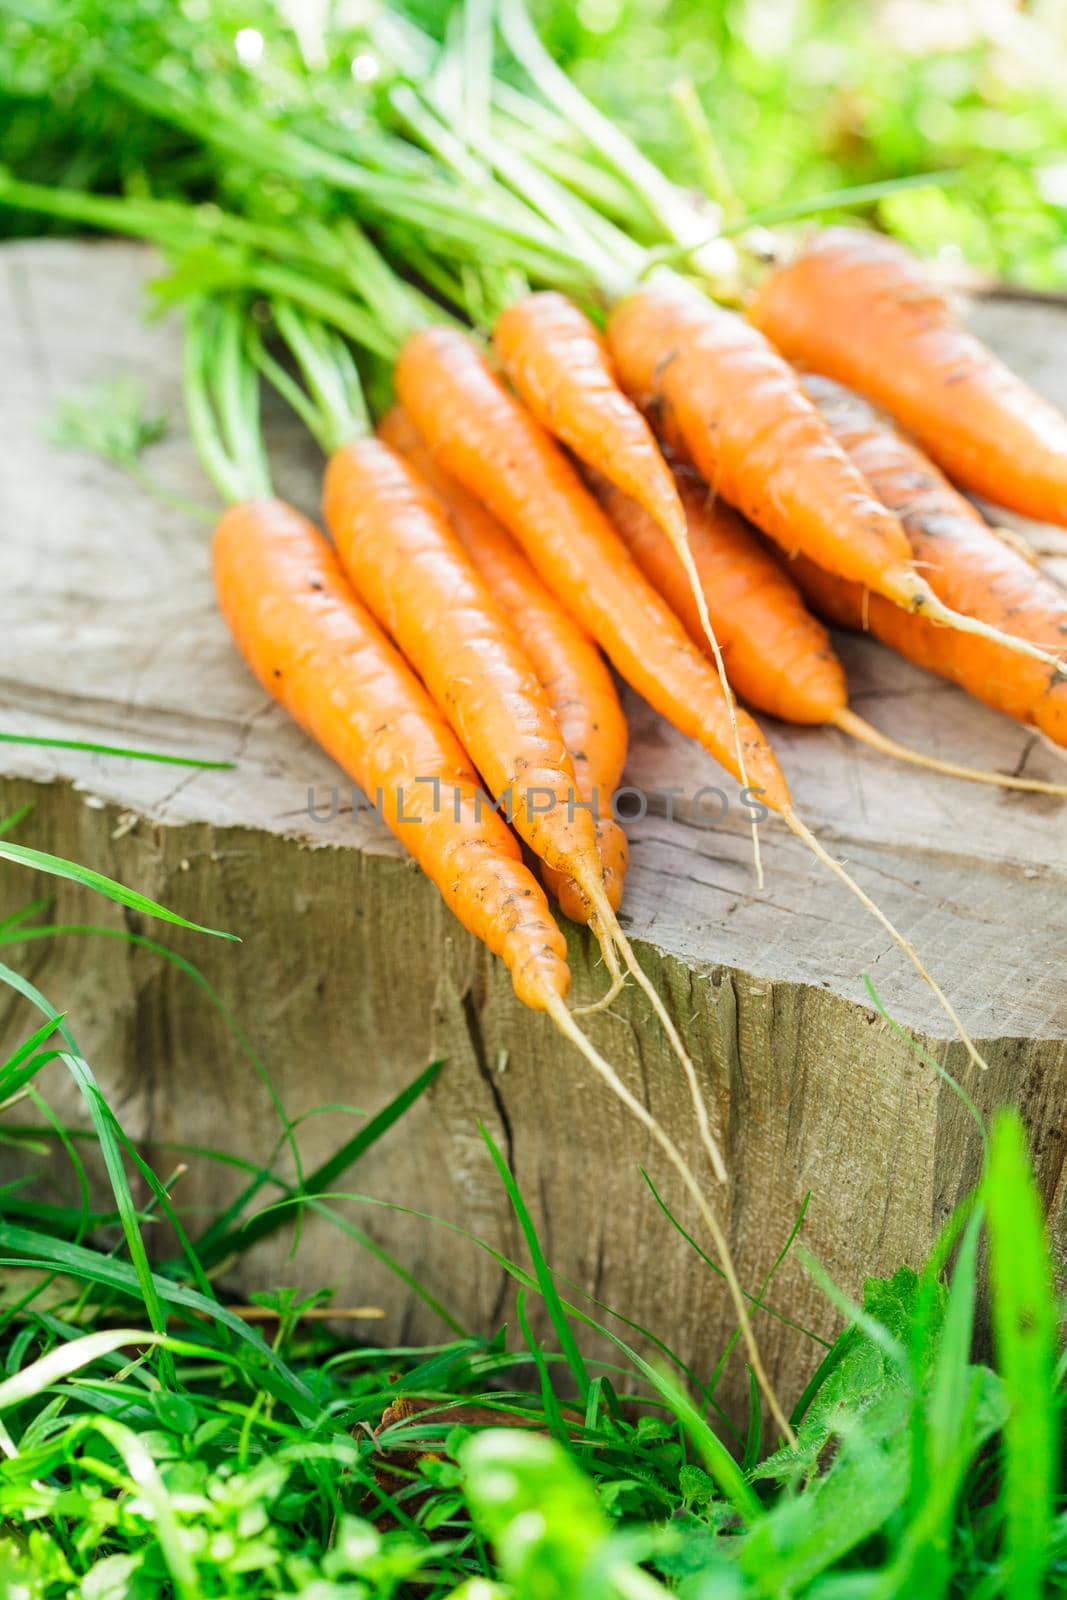 Fresh carrots from the garden, still life outdoor